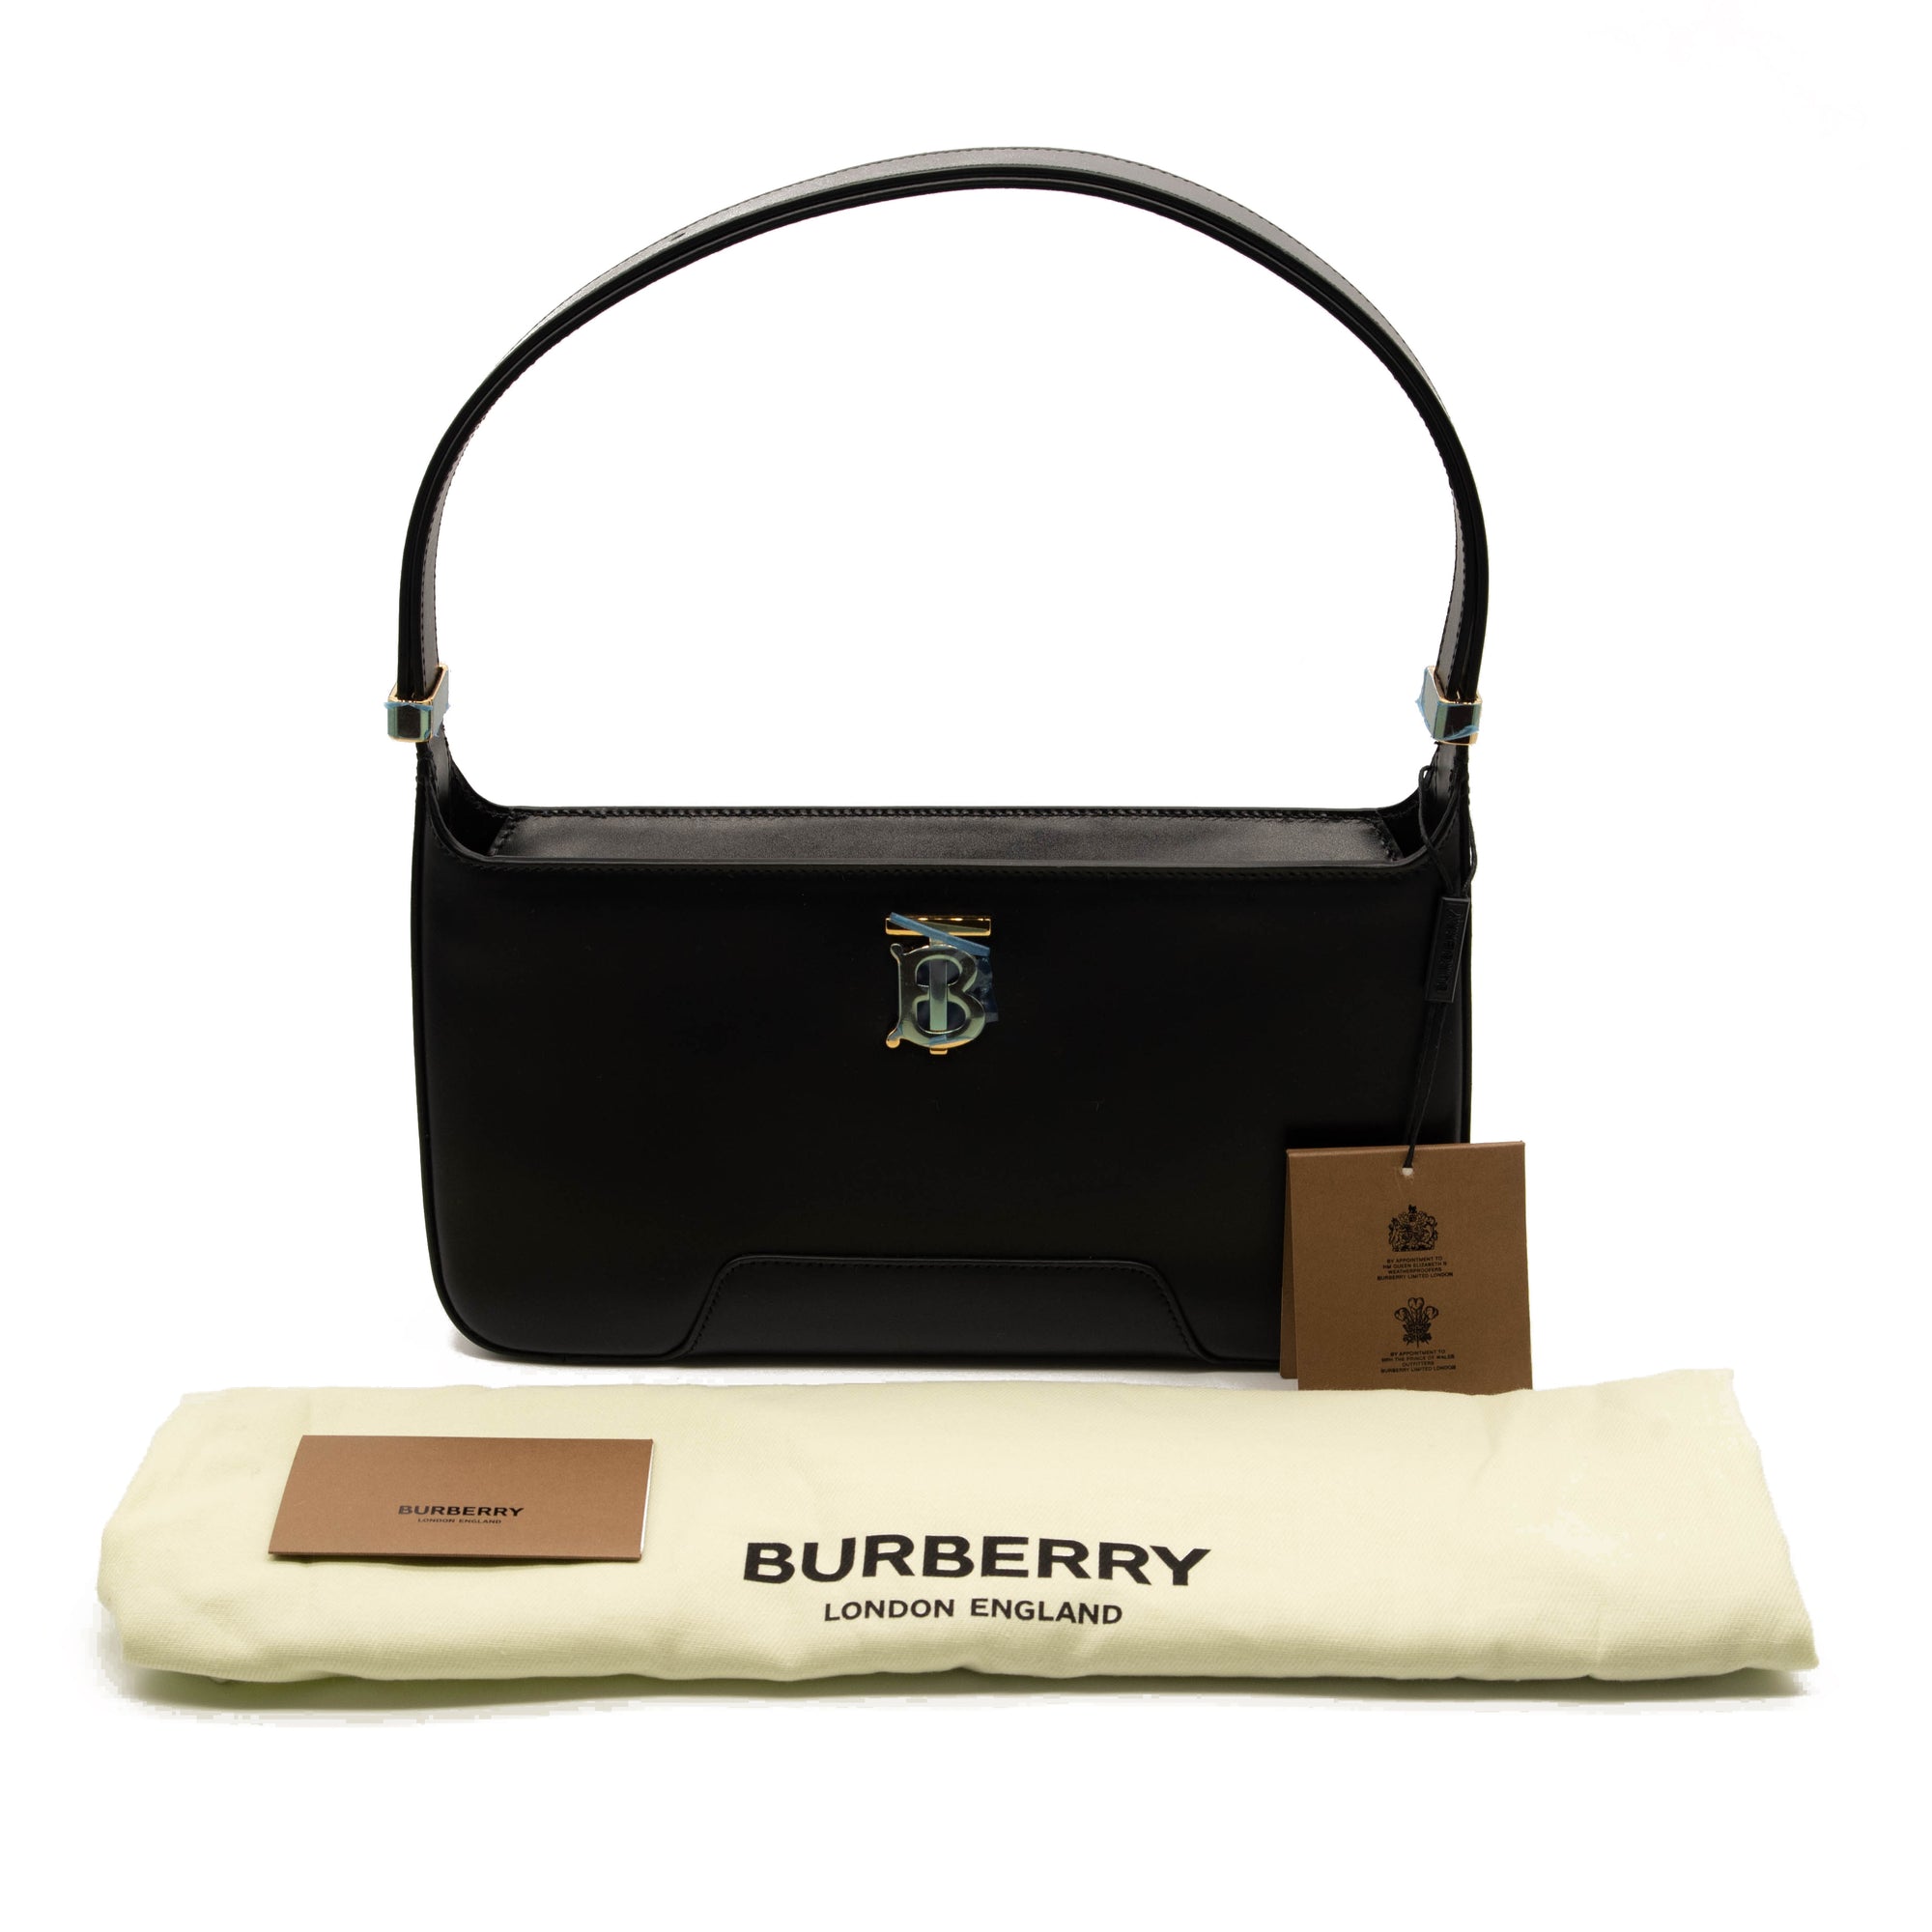 Burberry,Burberry,Burberry  Burberry purse, Burberry bag